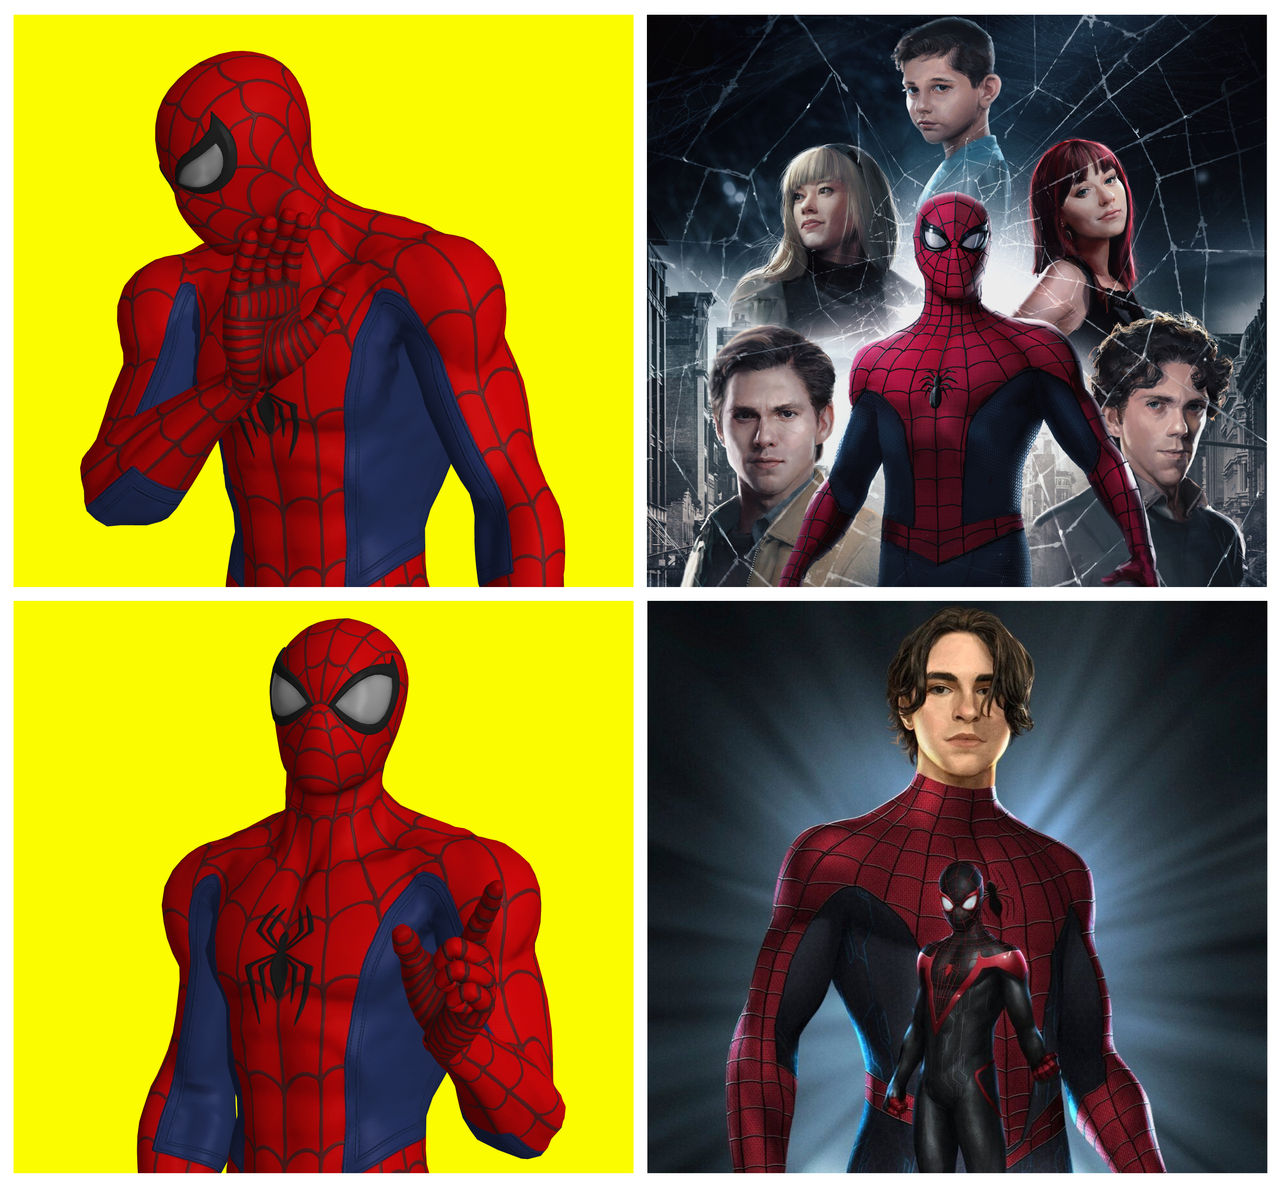 Spider-Man prefers Convergence over Lotus by WumpaWebHead on DeviantArt